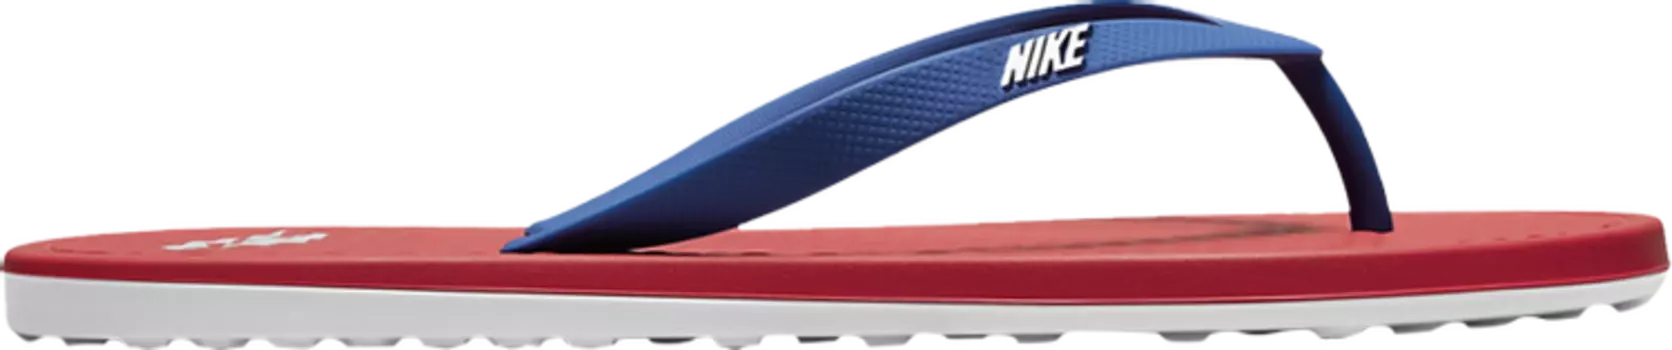 Сандалии Nike On Deck Flip Flop 'University Red Royal', красный